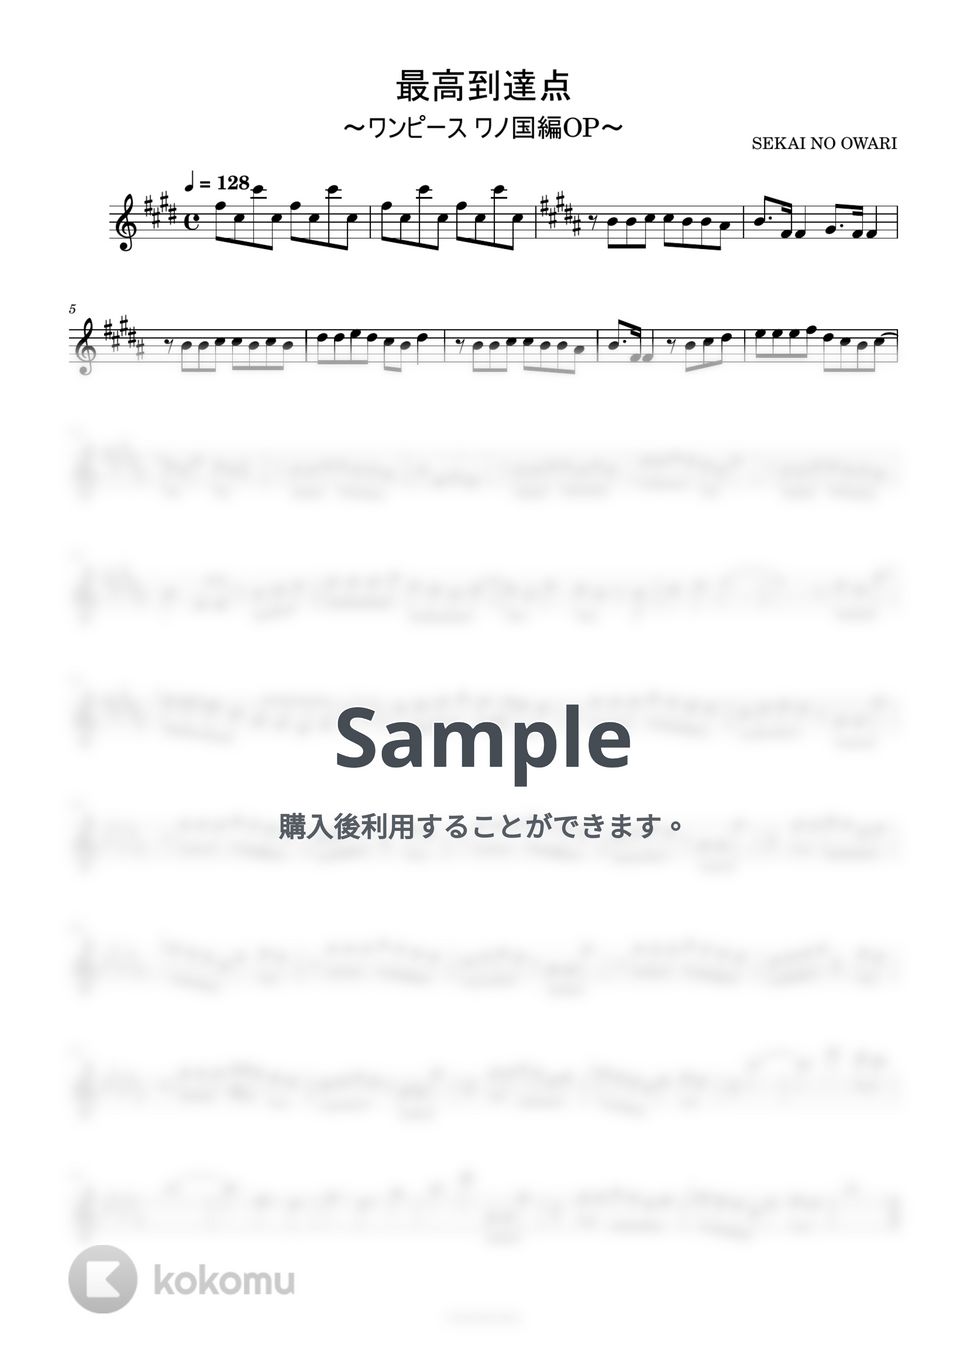 SEKAI NO OWARI - 最高到達点 (ワンピースOP/最高到達点/メロディー譜/ピアノ/C管楽器対応) by utamenma